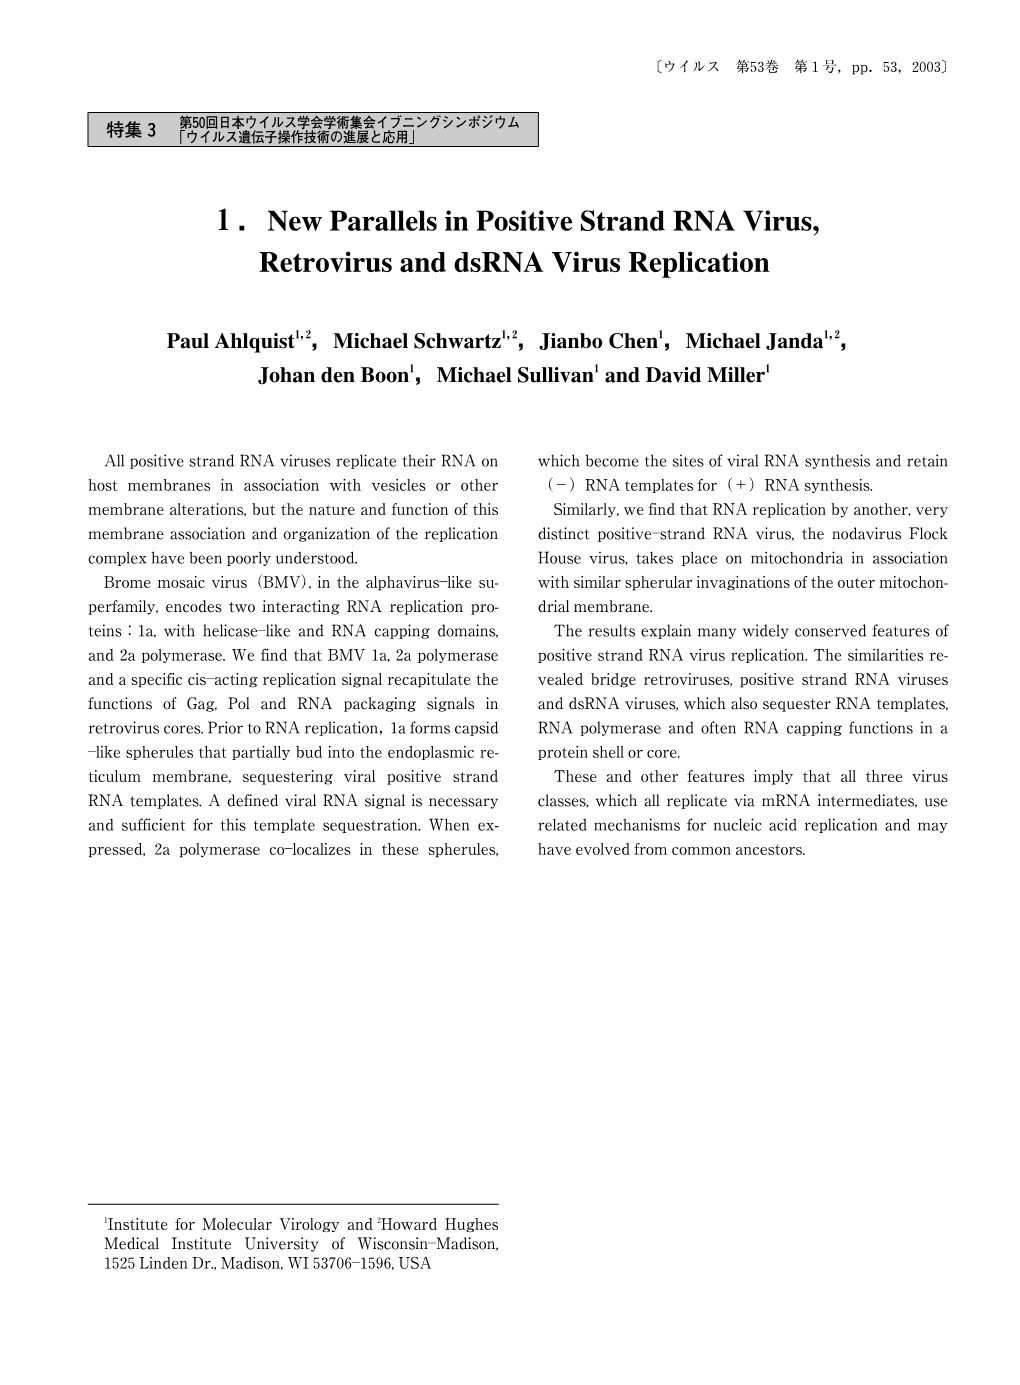 New Parallels in Positive Strand RNA Virus, Retrovirus and Dsrna Virus Replication